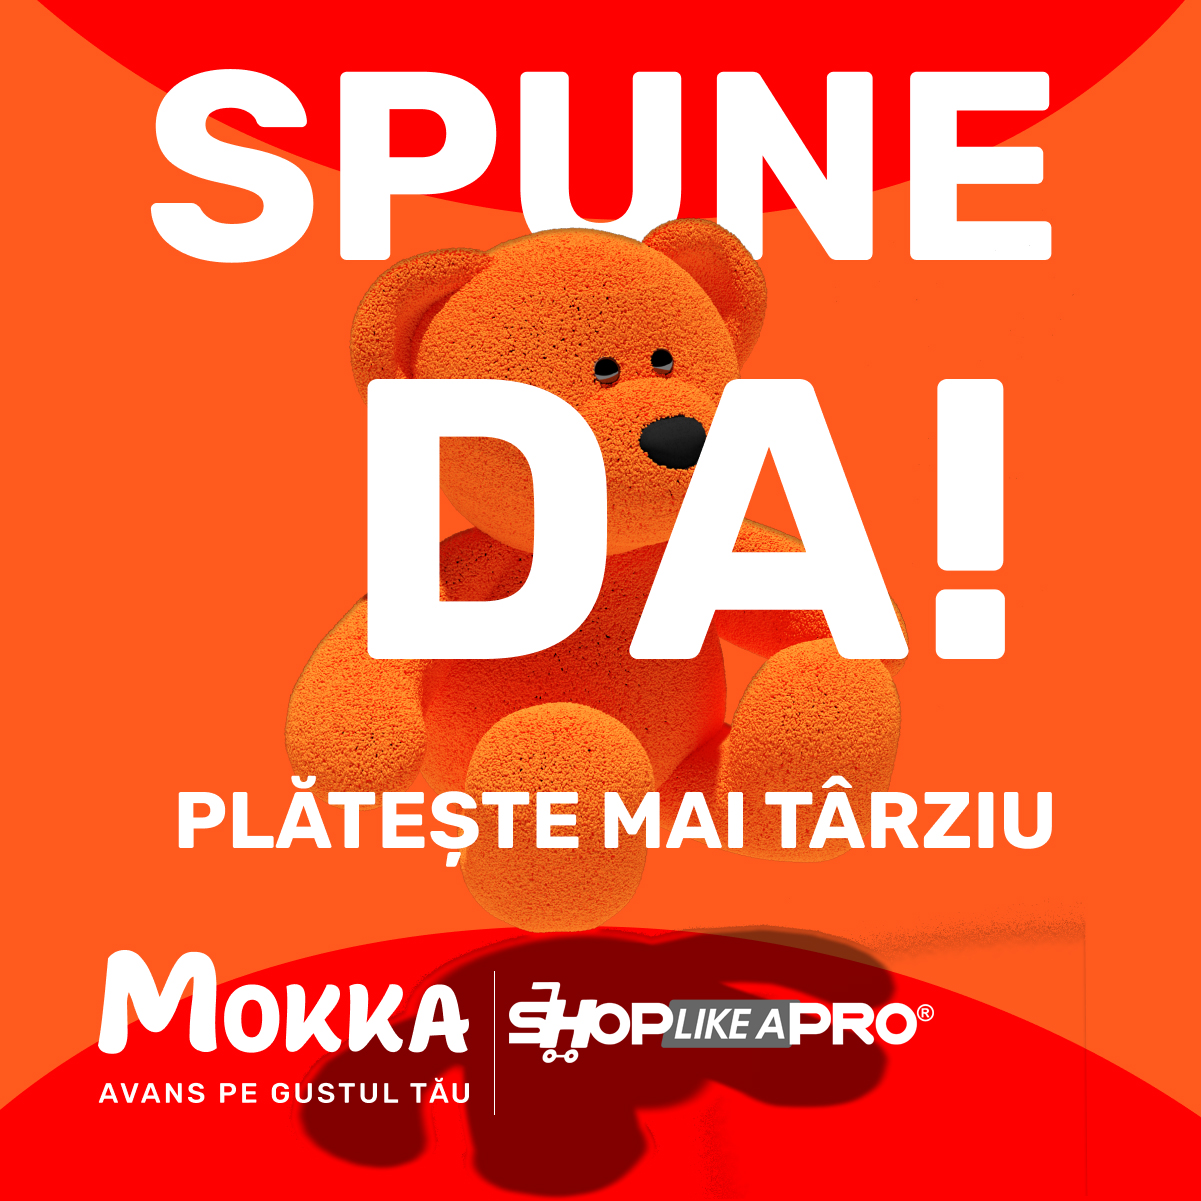 Cumperi acum platesti mai tarziu cu MOKKA partener oficial shoplikeapro.ro